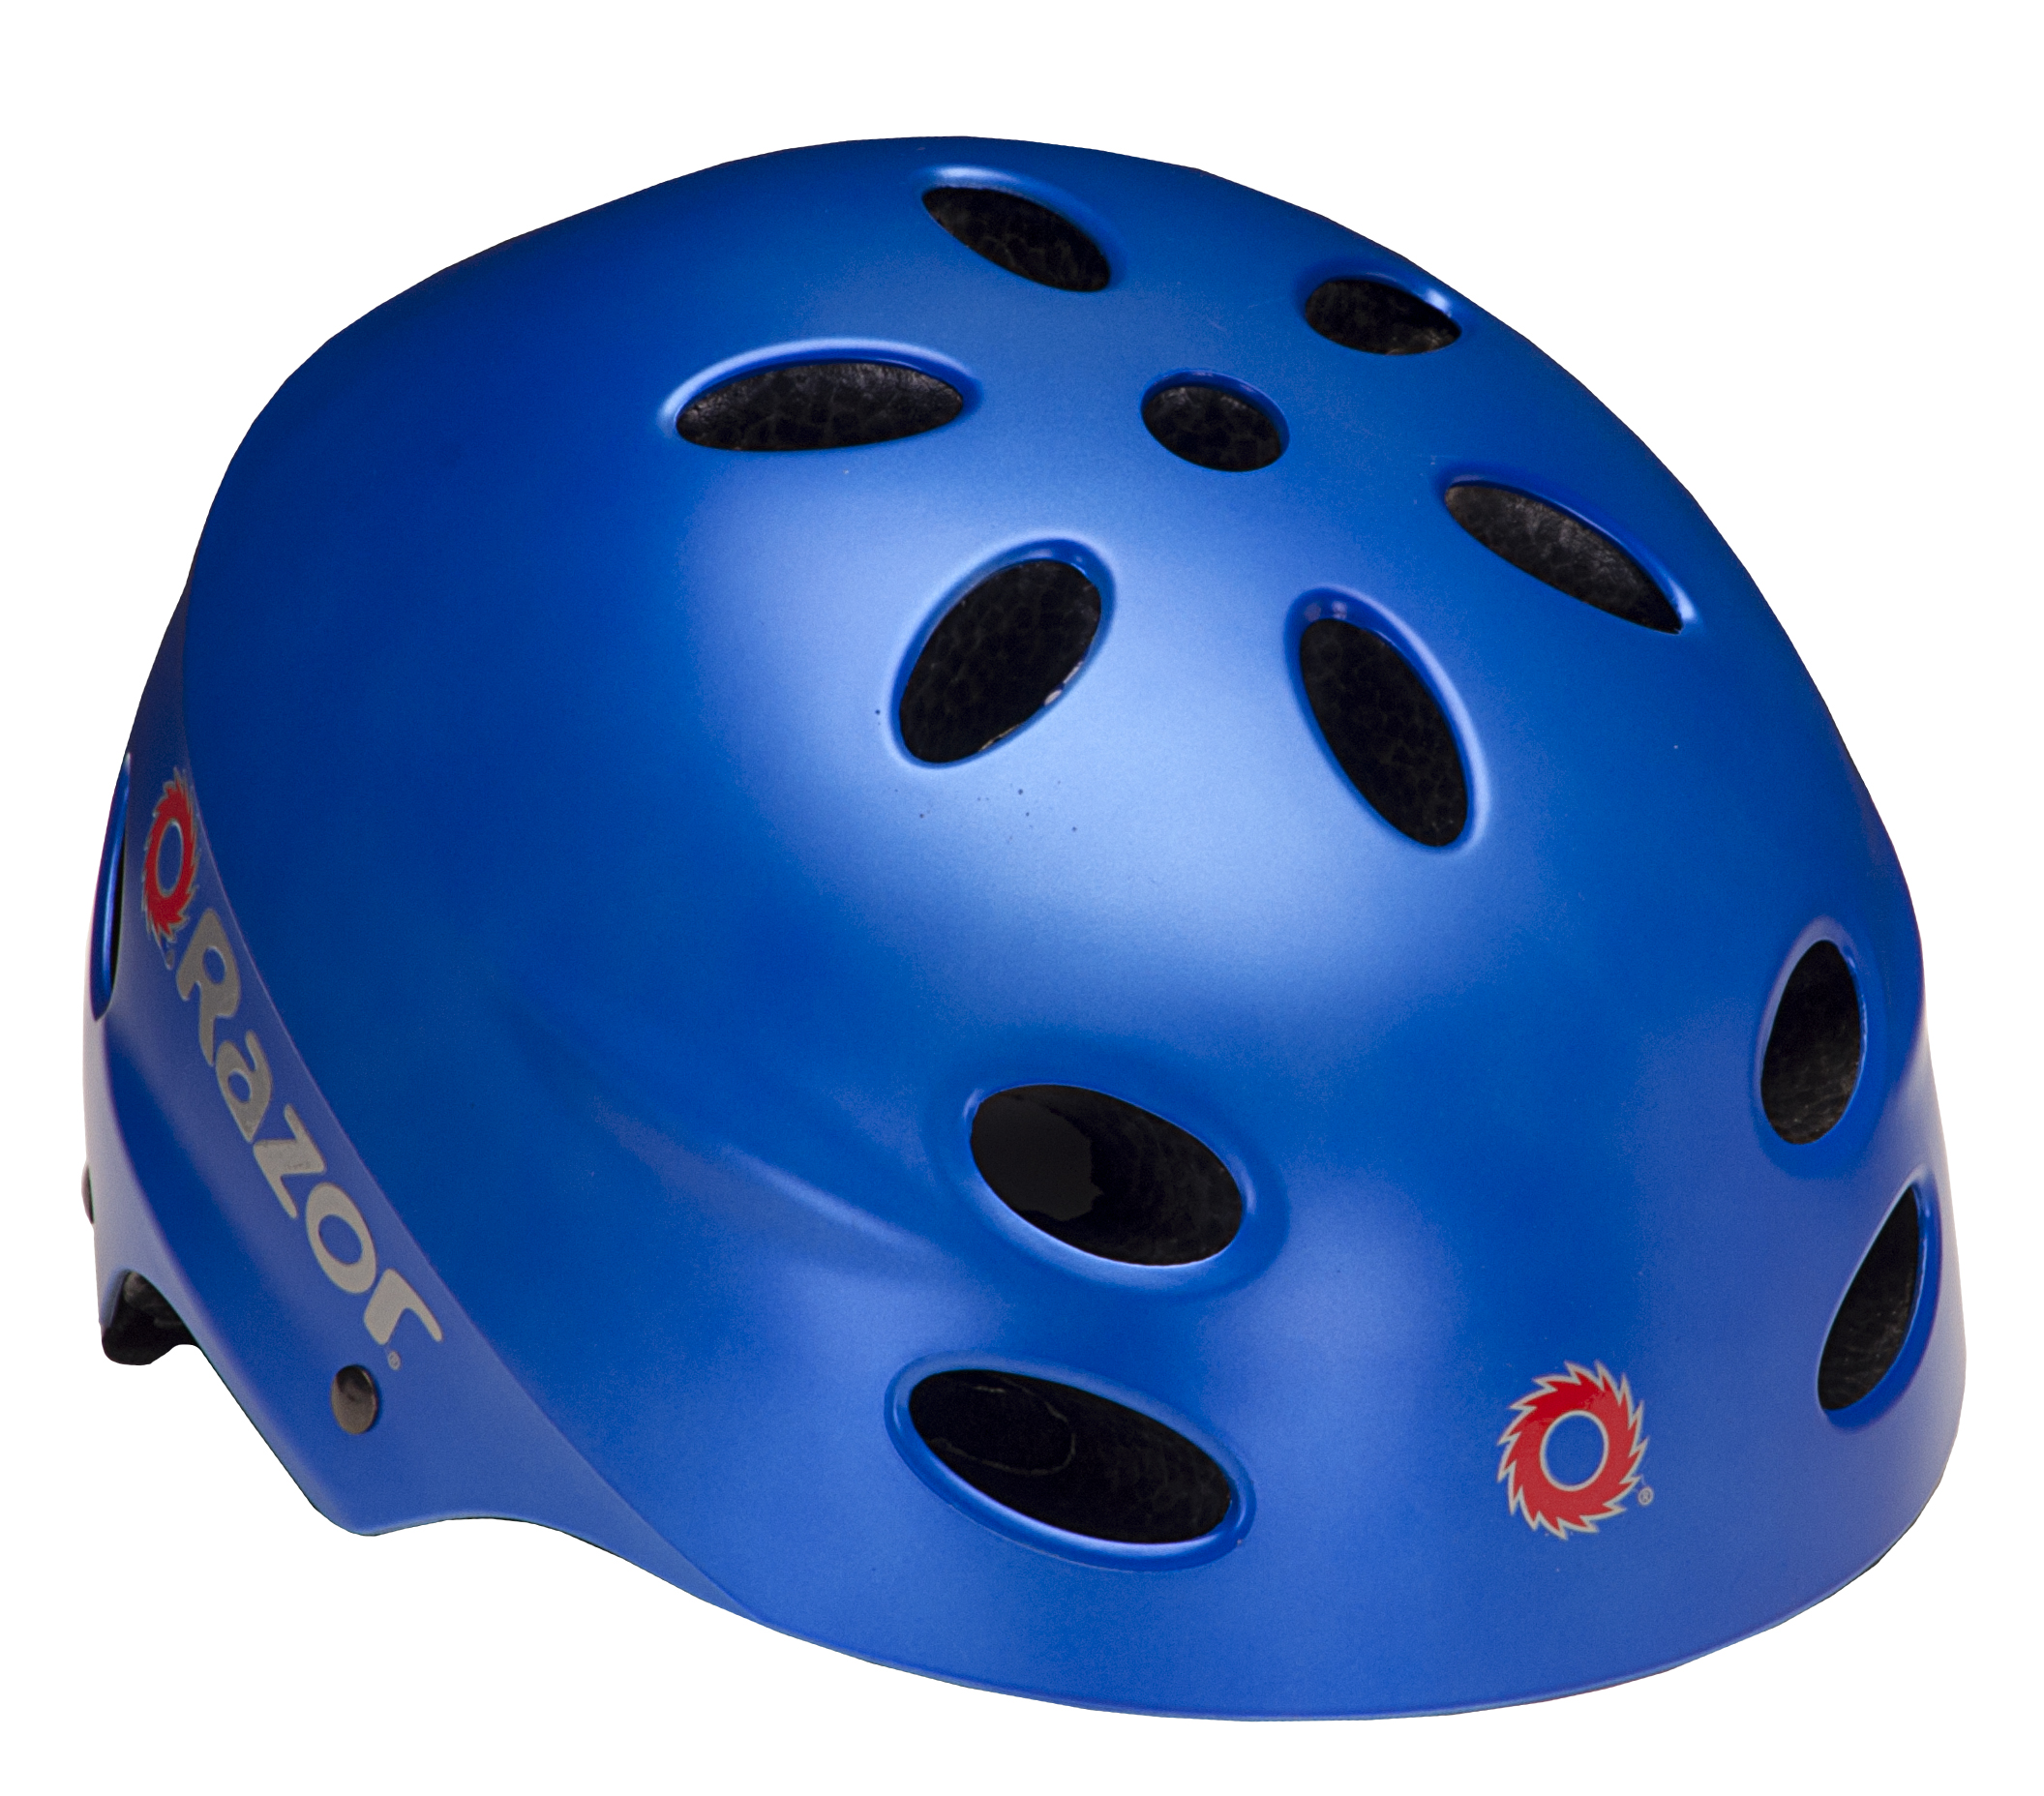 Razor V17 Multi-Sport Child's Helmet, Satin Blue - image 3 of 10